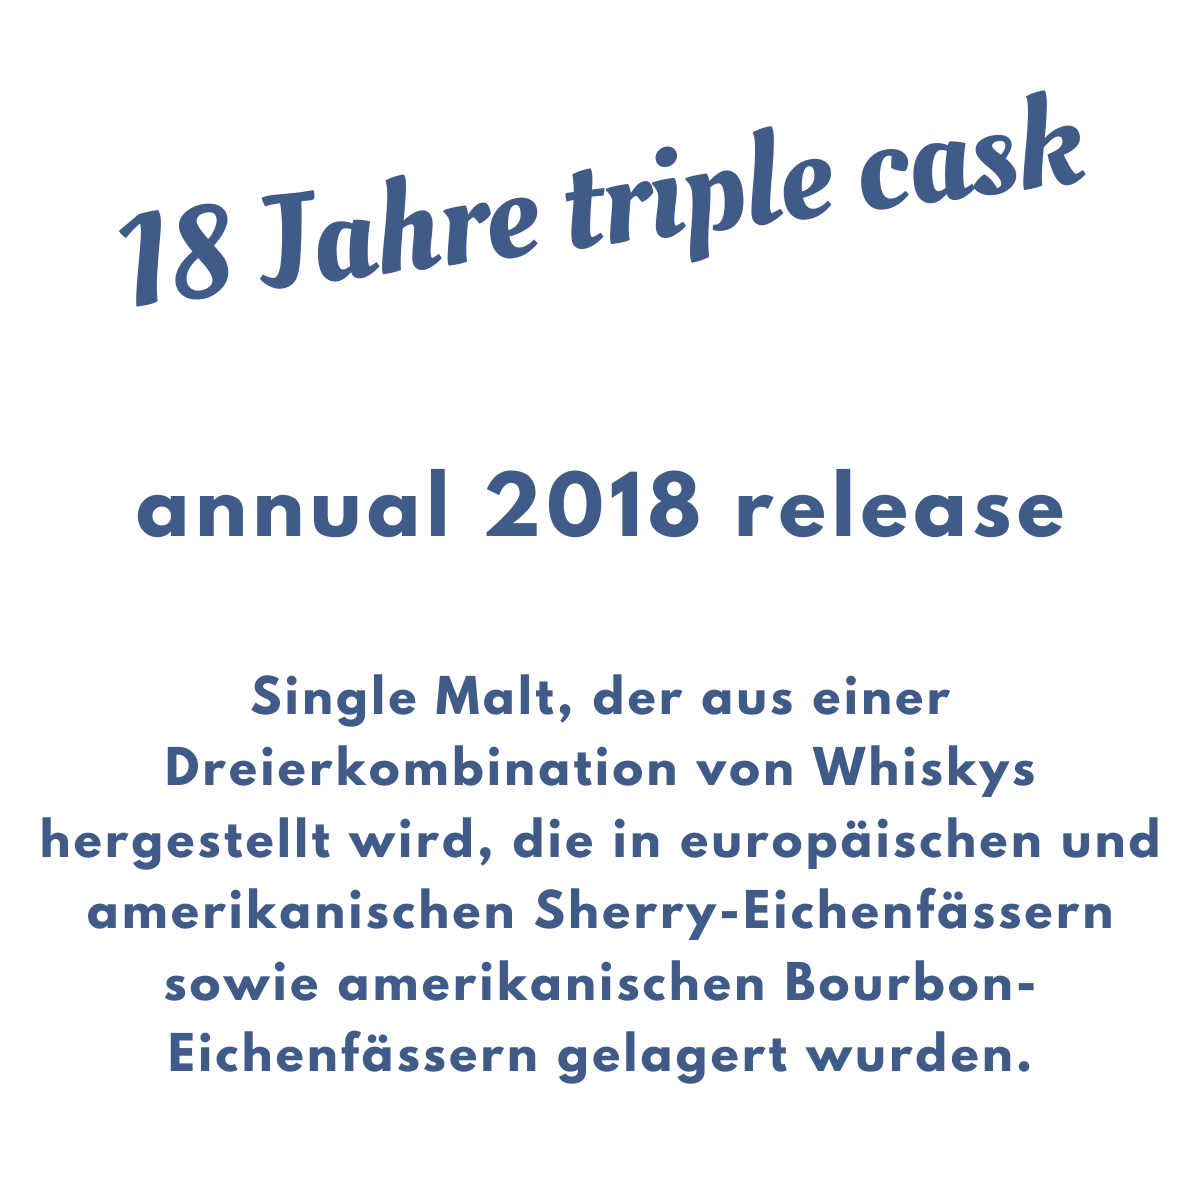 Macallan 18 Jahre triple cask 2018 -  43% Vol. / 0,7l  (Sammlerstück/Sonderregel)